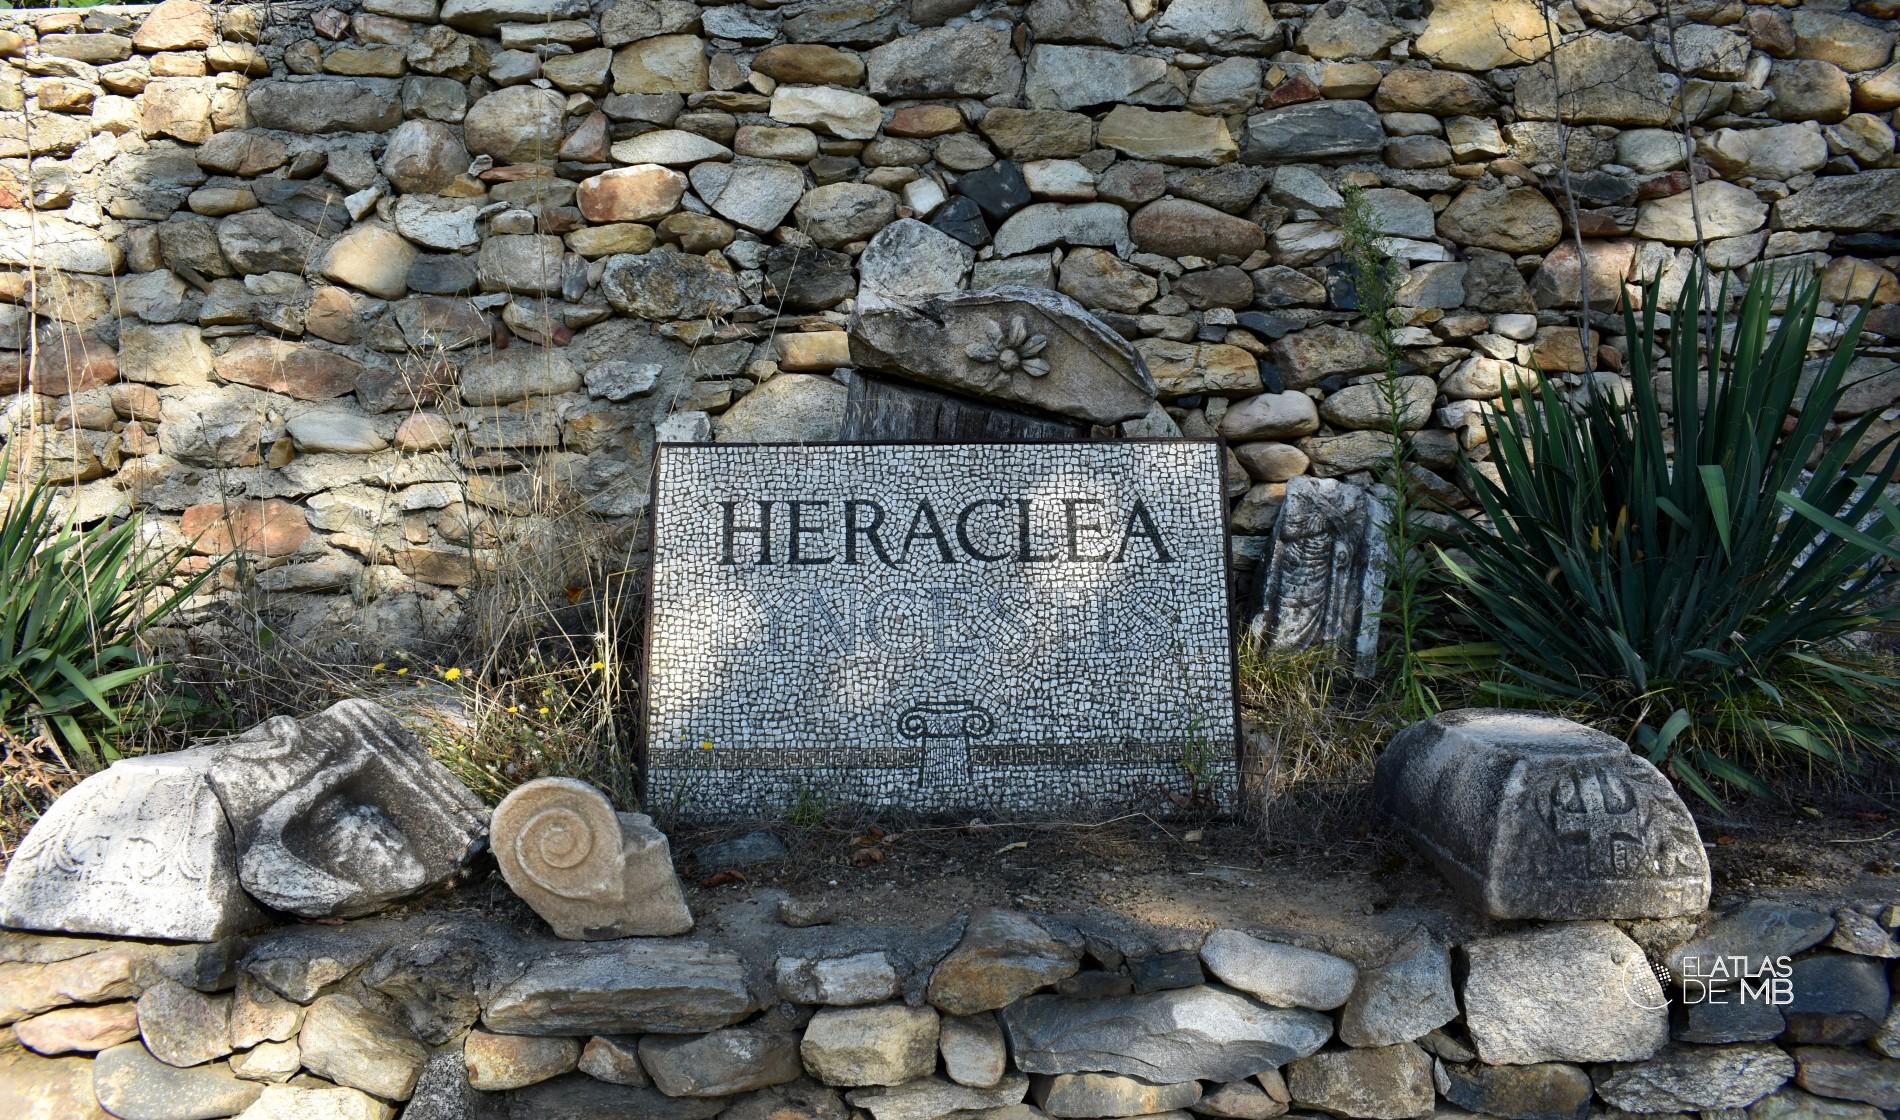 Heraclea, Bitola